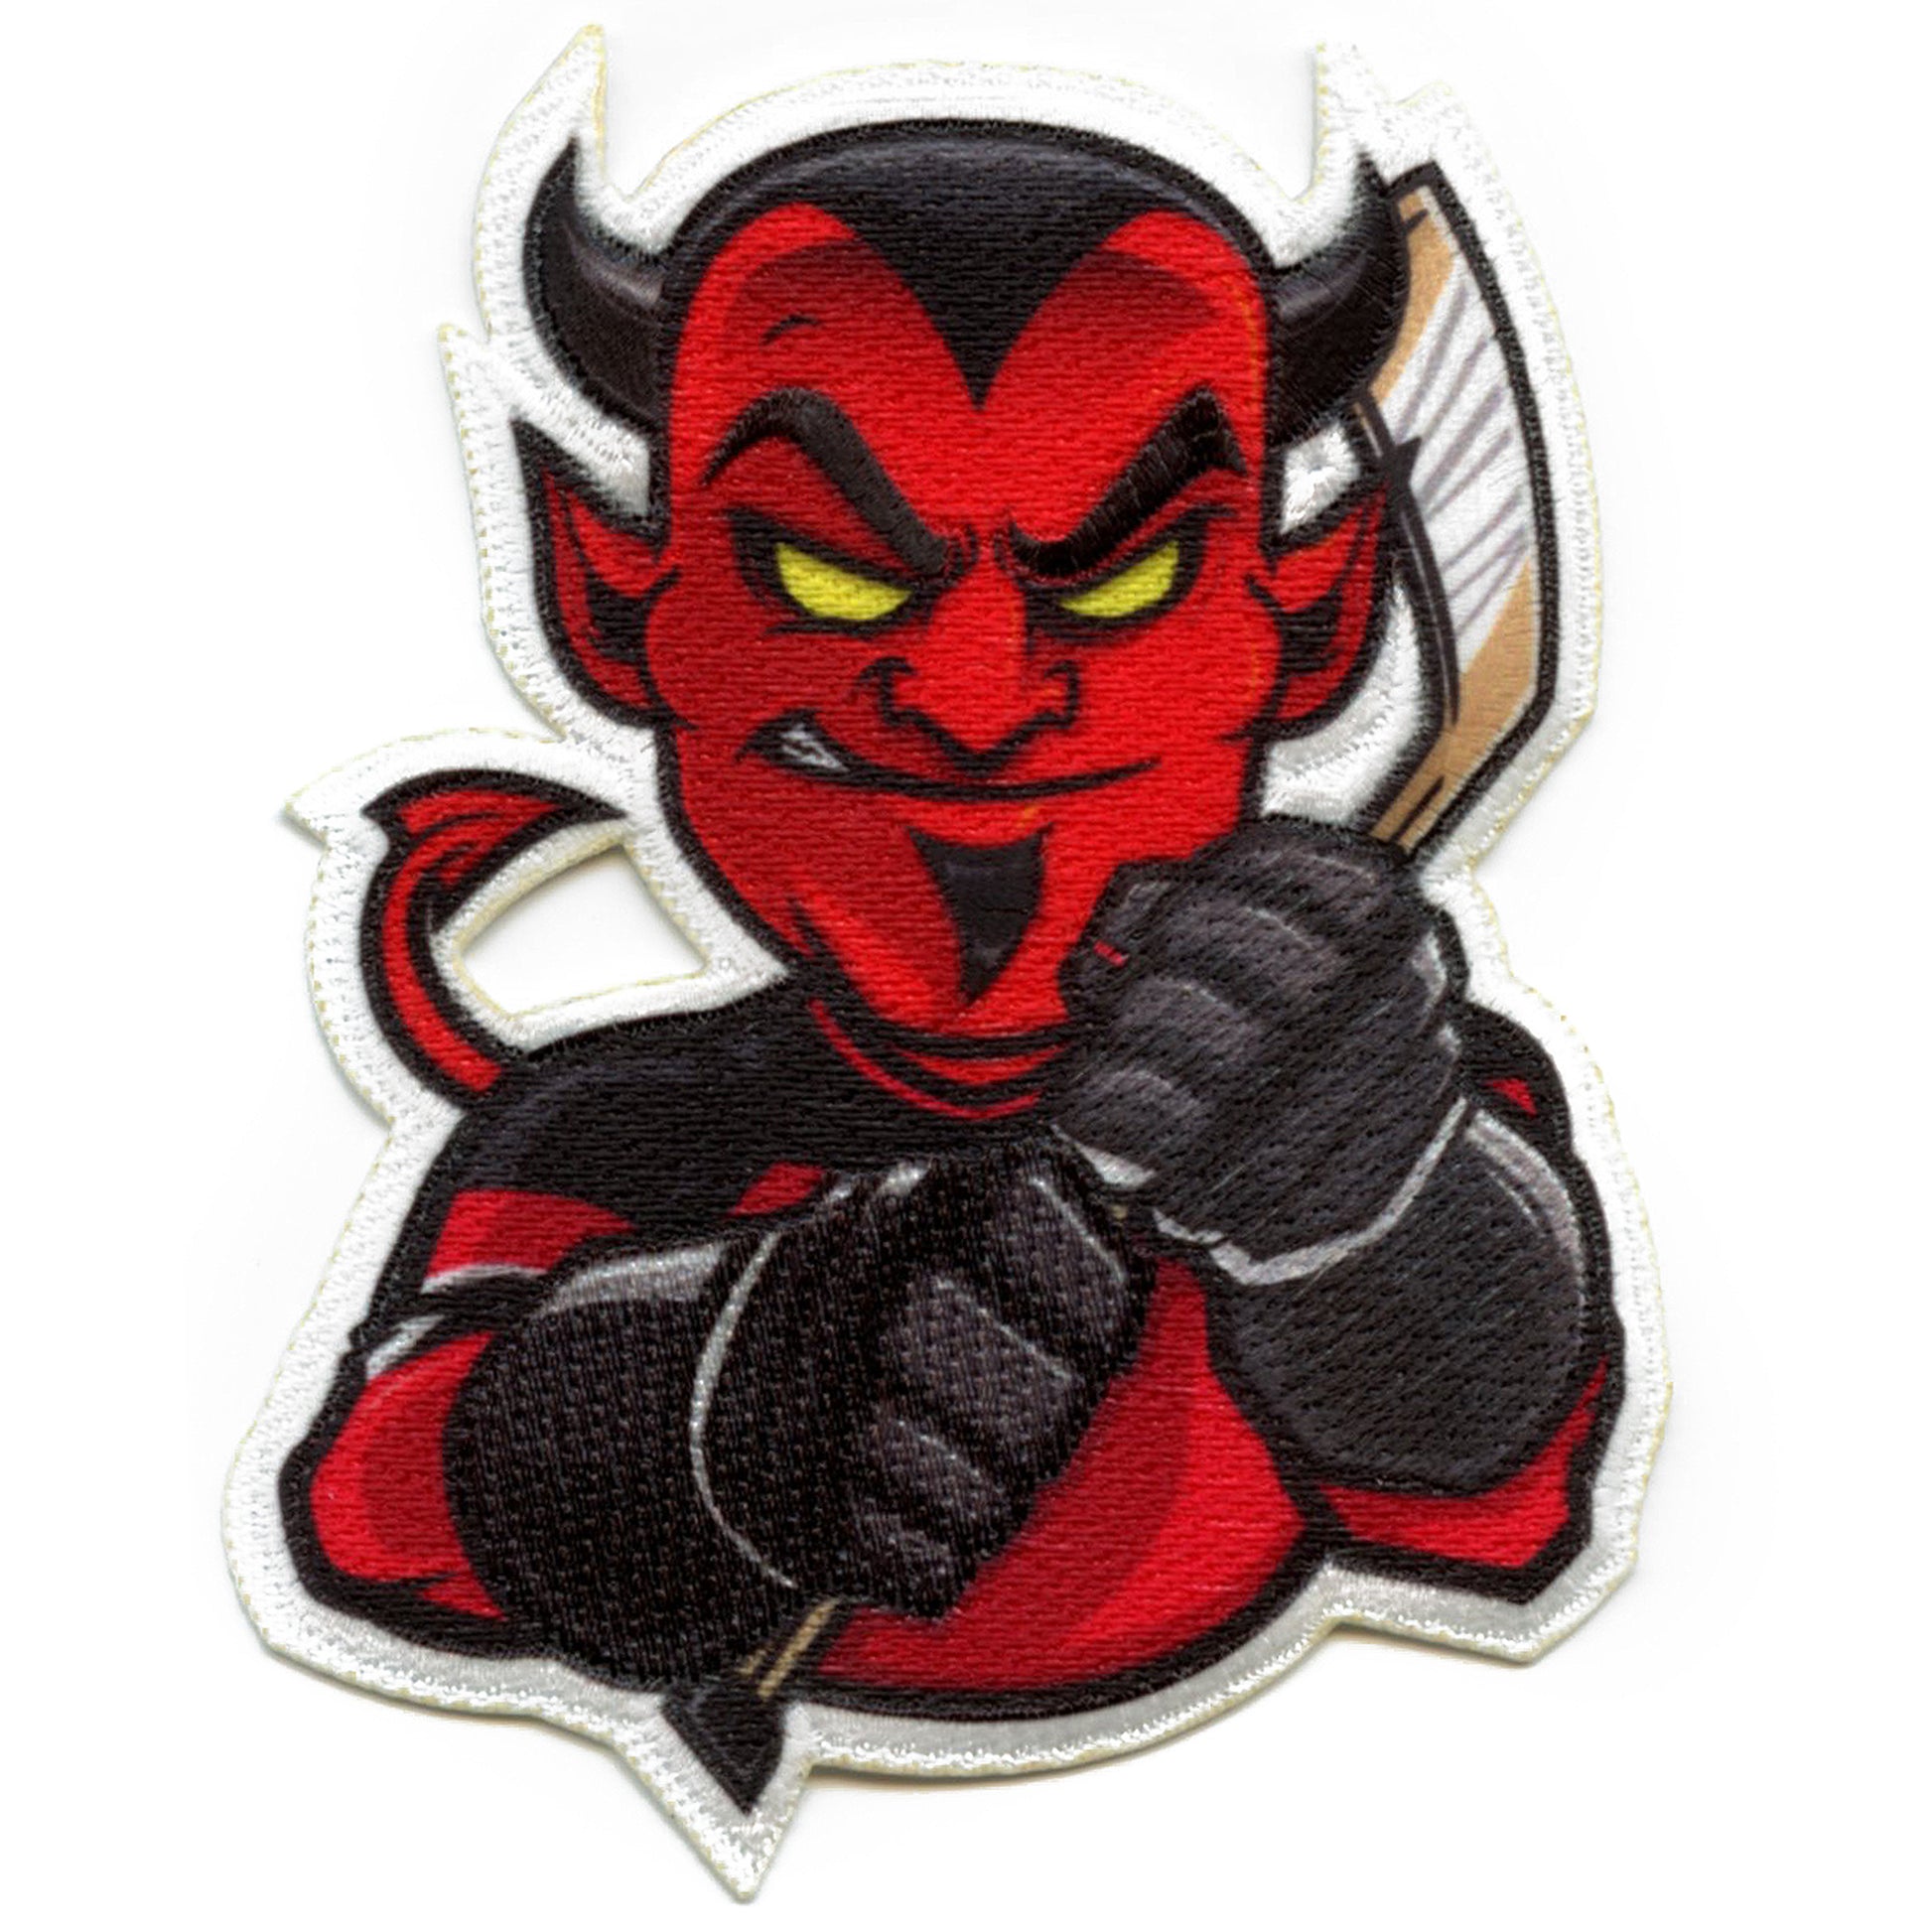 Devils Game, Food, and Backpack - New Jersey Devils